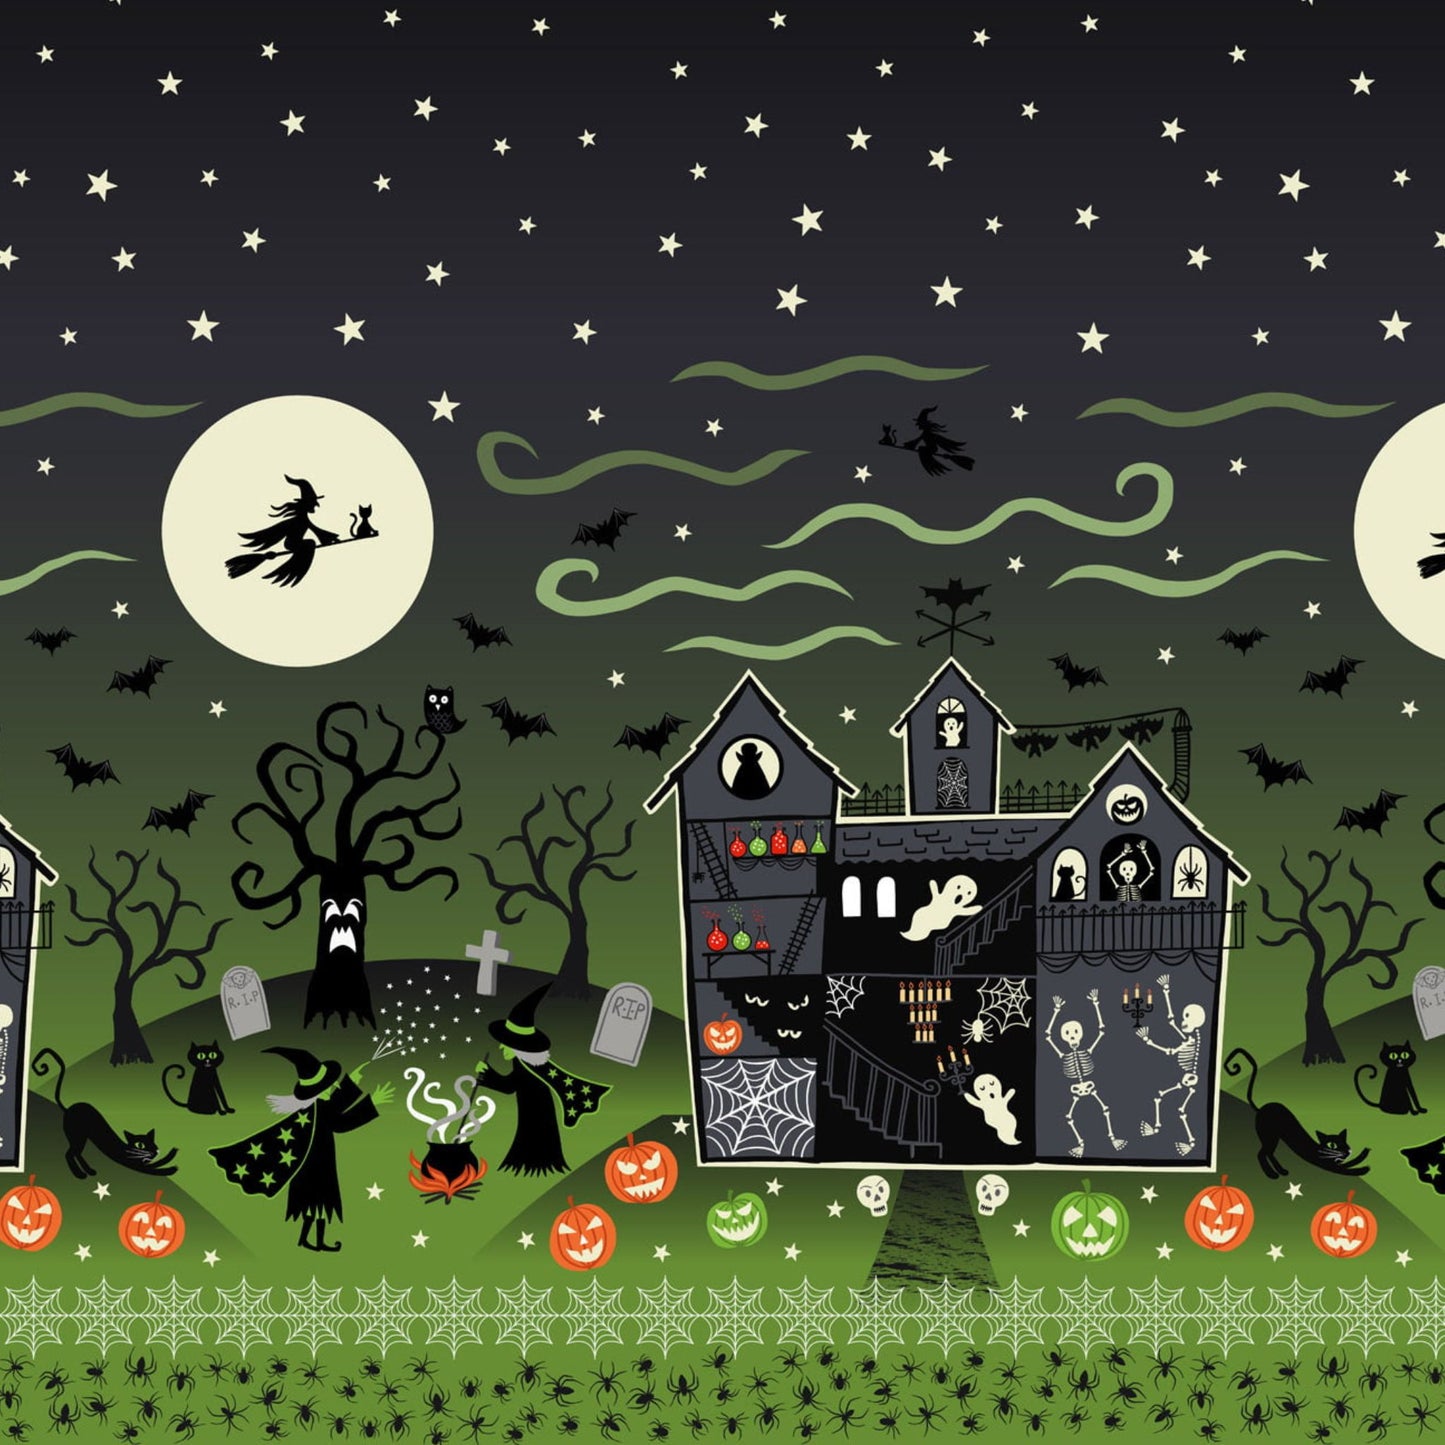 Haunted House Border Print - Haunted House Halloween Fabric Range - Lewis and Irene - Green